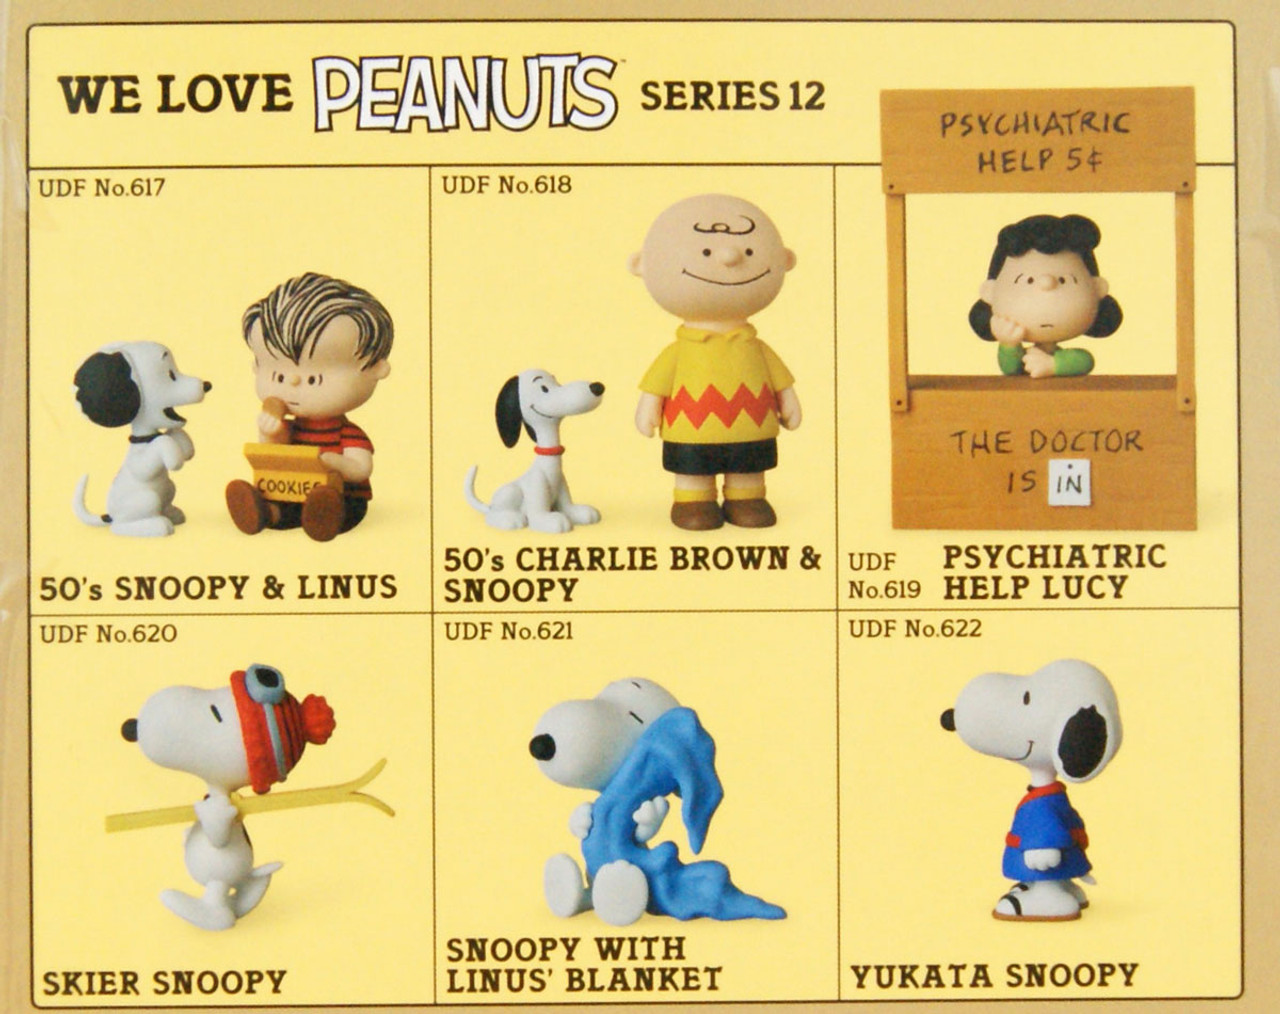 UDF Peanuts Series 12 Snoopy with Linus Blanket Ultra Detail Figure by Medicom